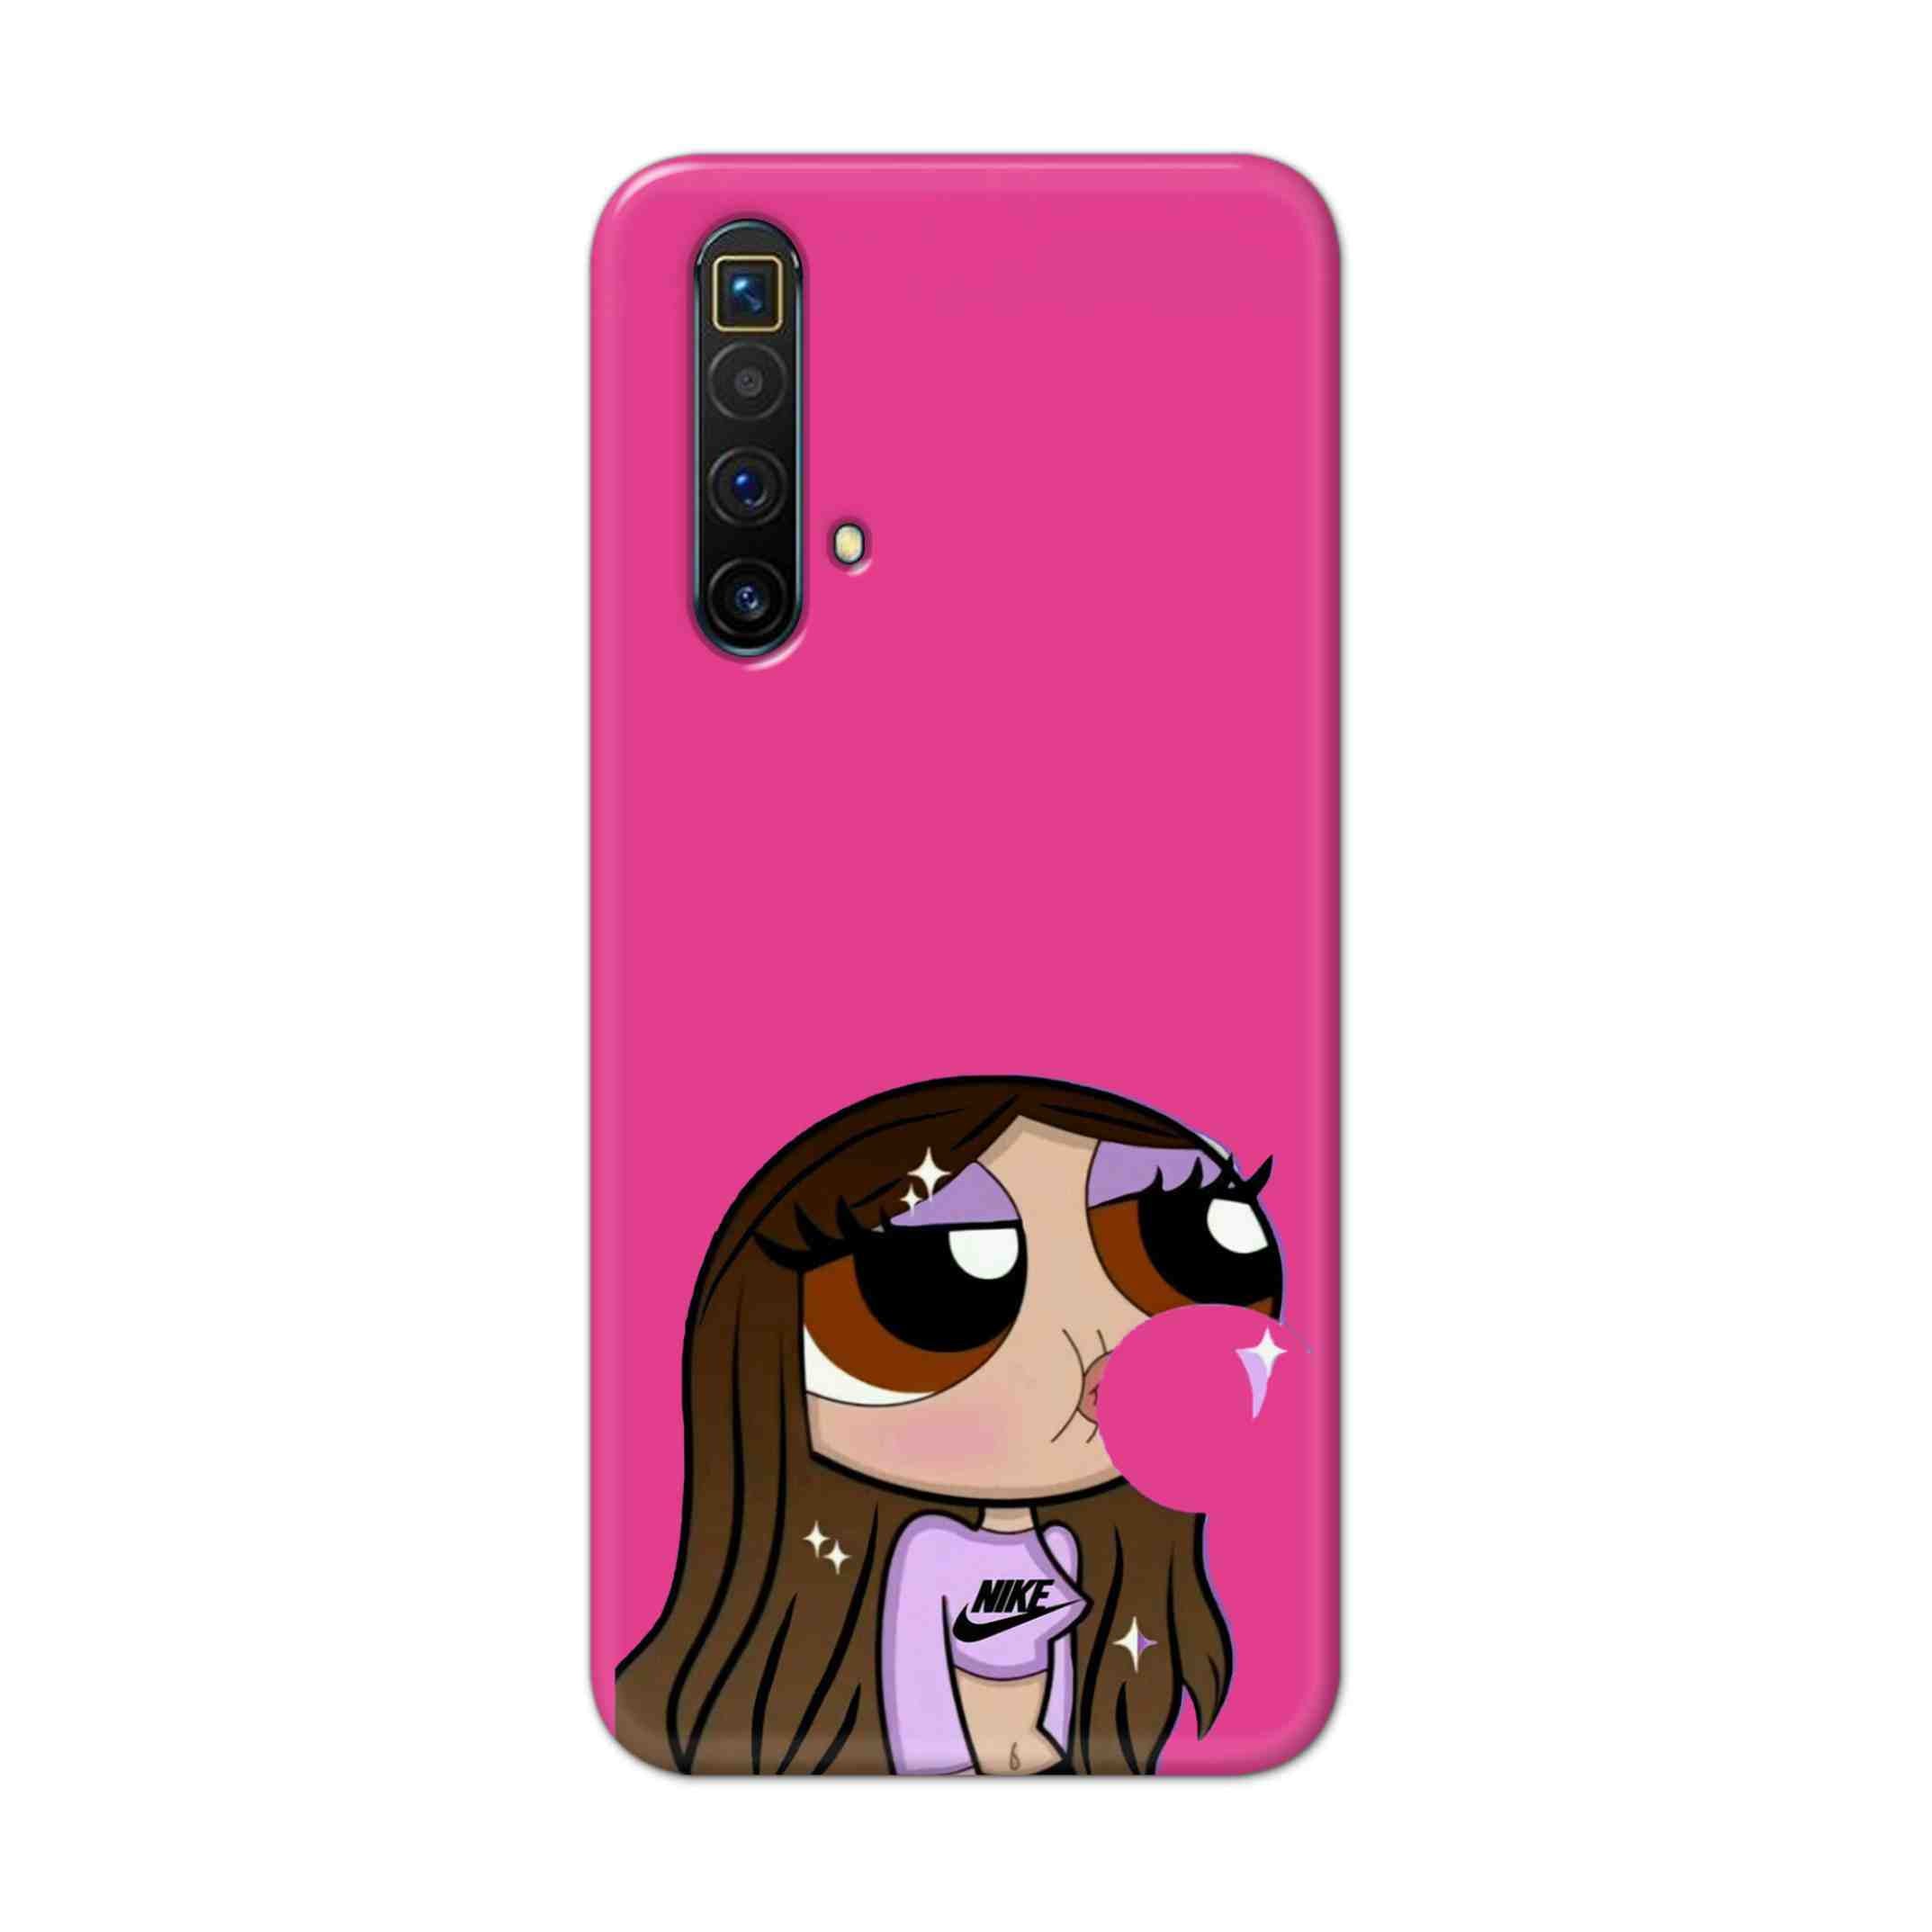 Buy Bubble Girl Hard Back Mobile Phone Case Cover For Oppo Realme X3 Online